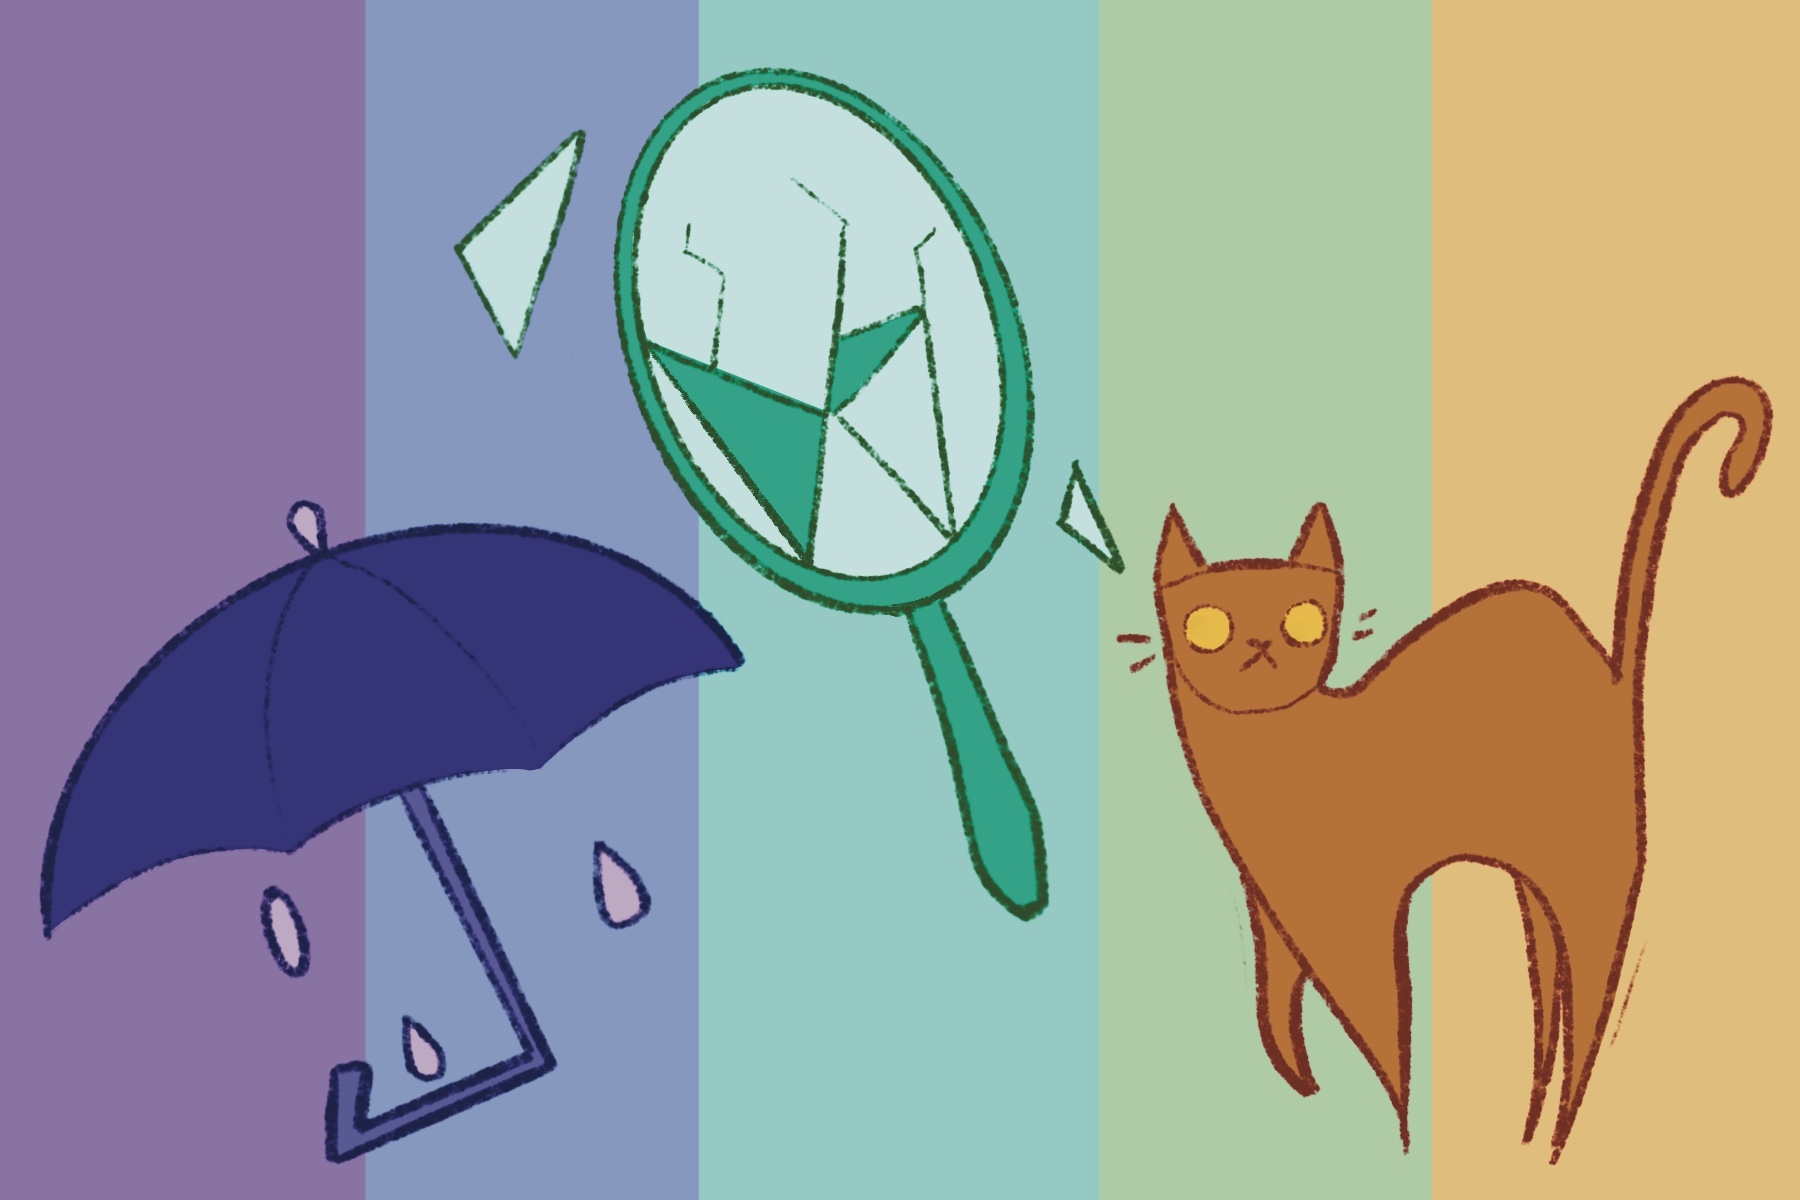 superstitions like black cat, broken mirrors, umbrellas indoors